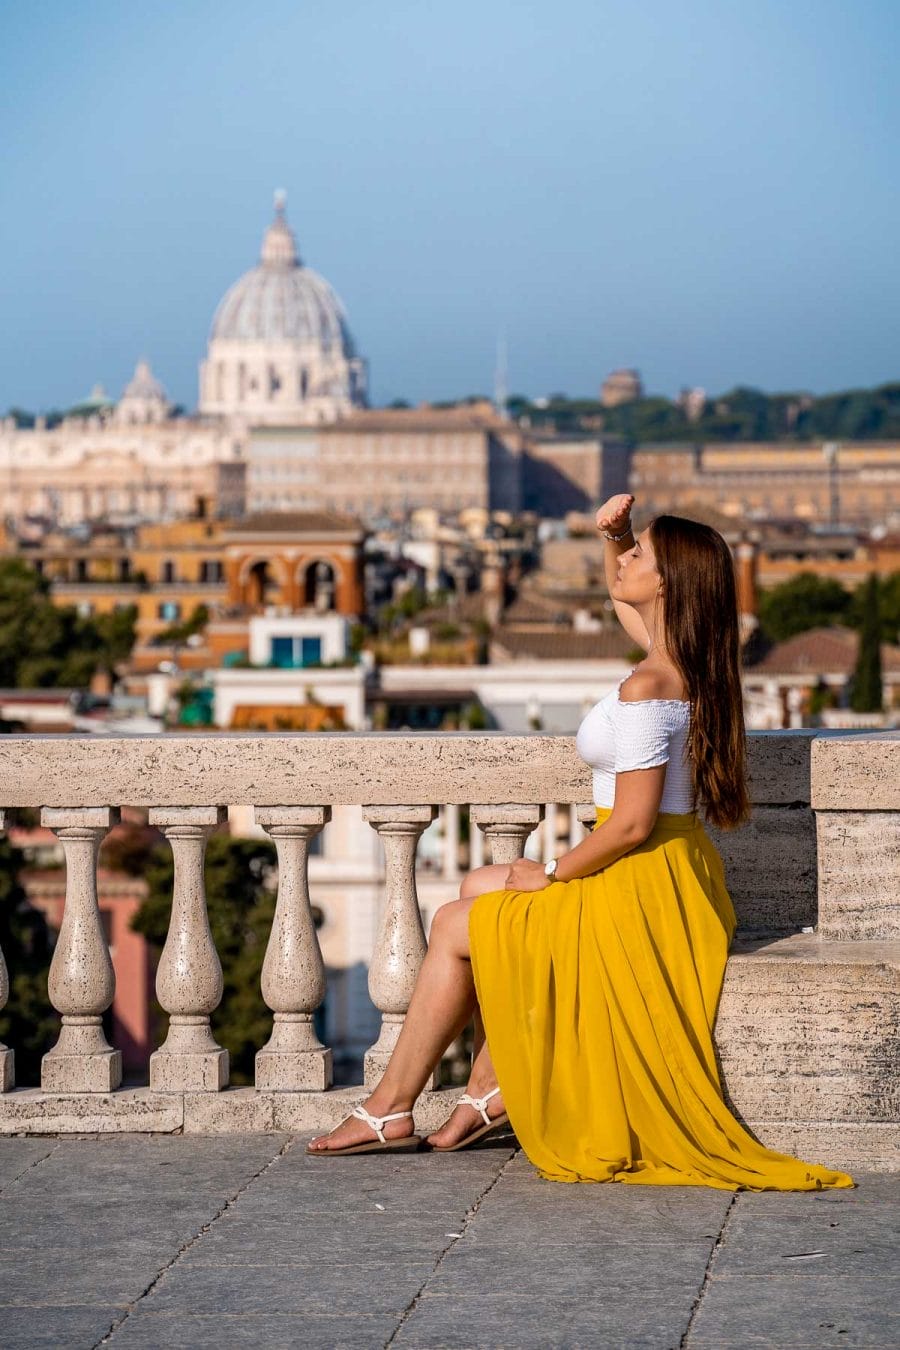 Girl in a yellow skirt at Terrazza del Pincio, Rome